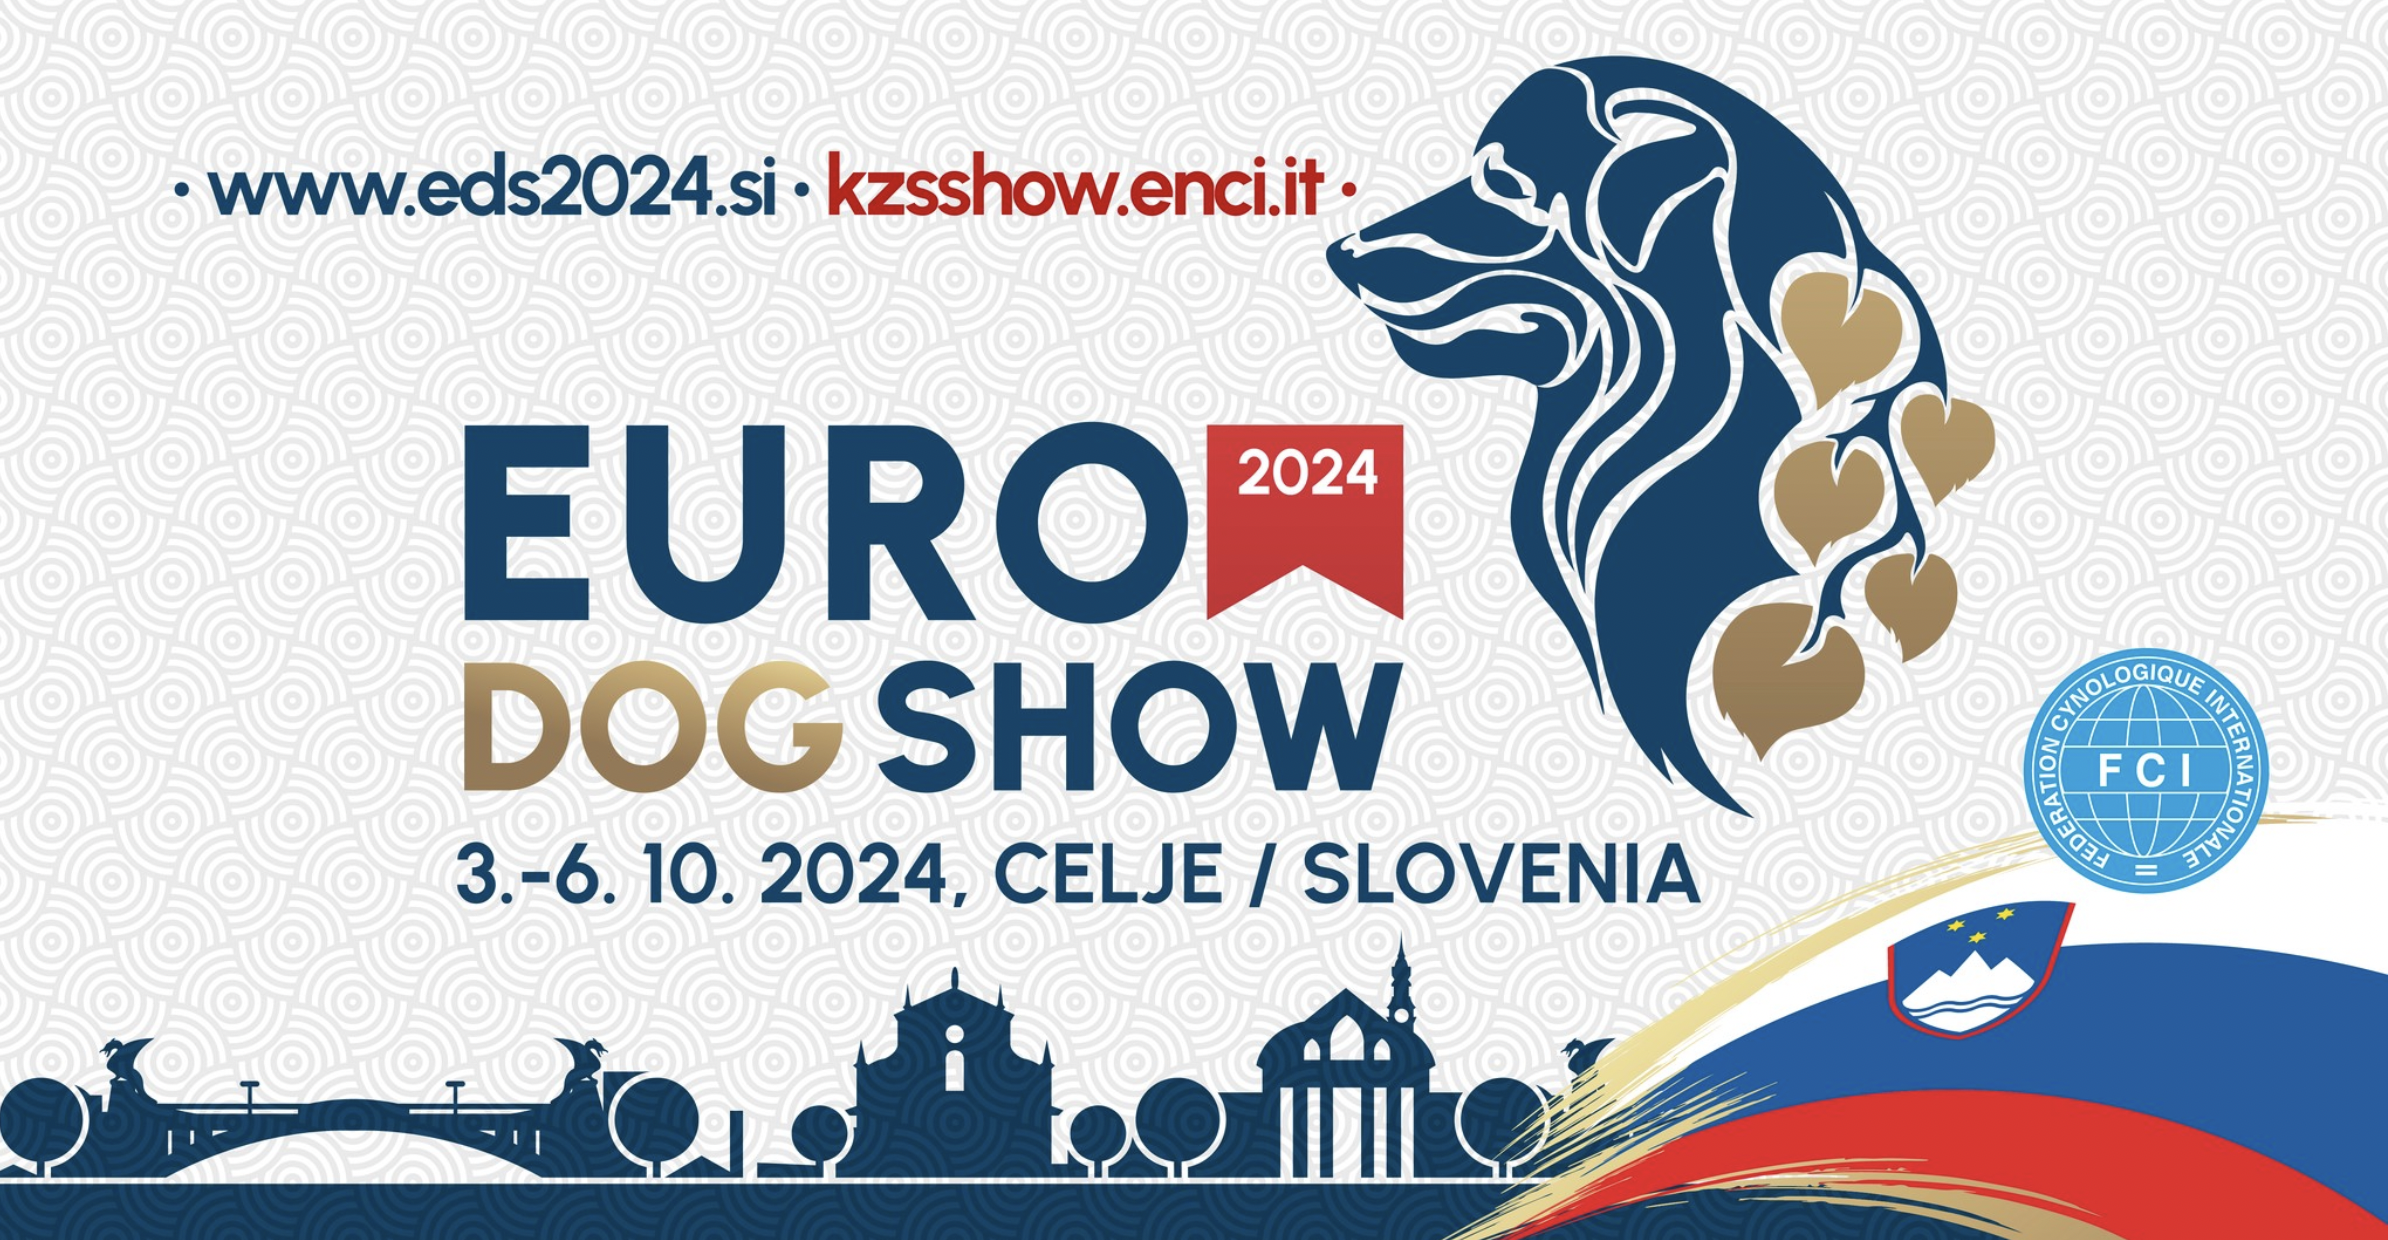 EUROPEAN DOG SHOW 2024